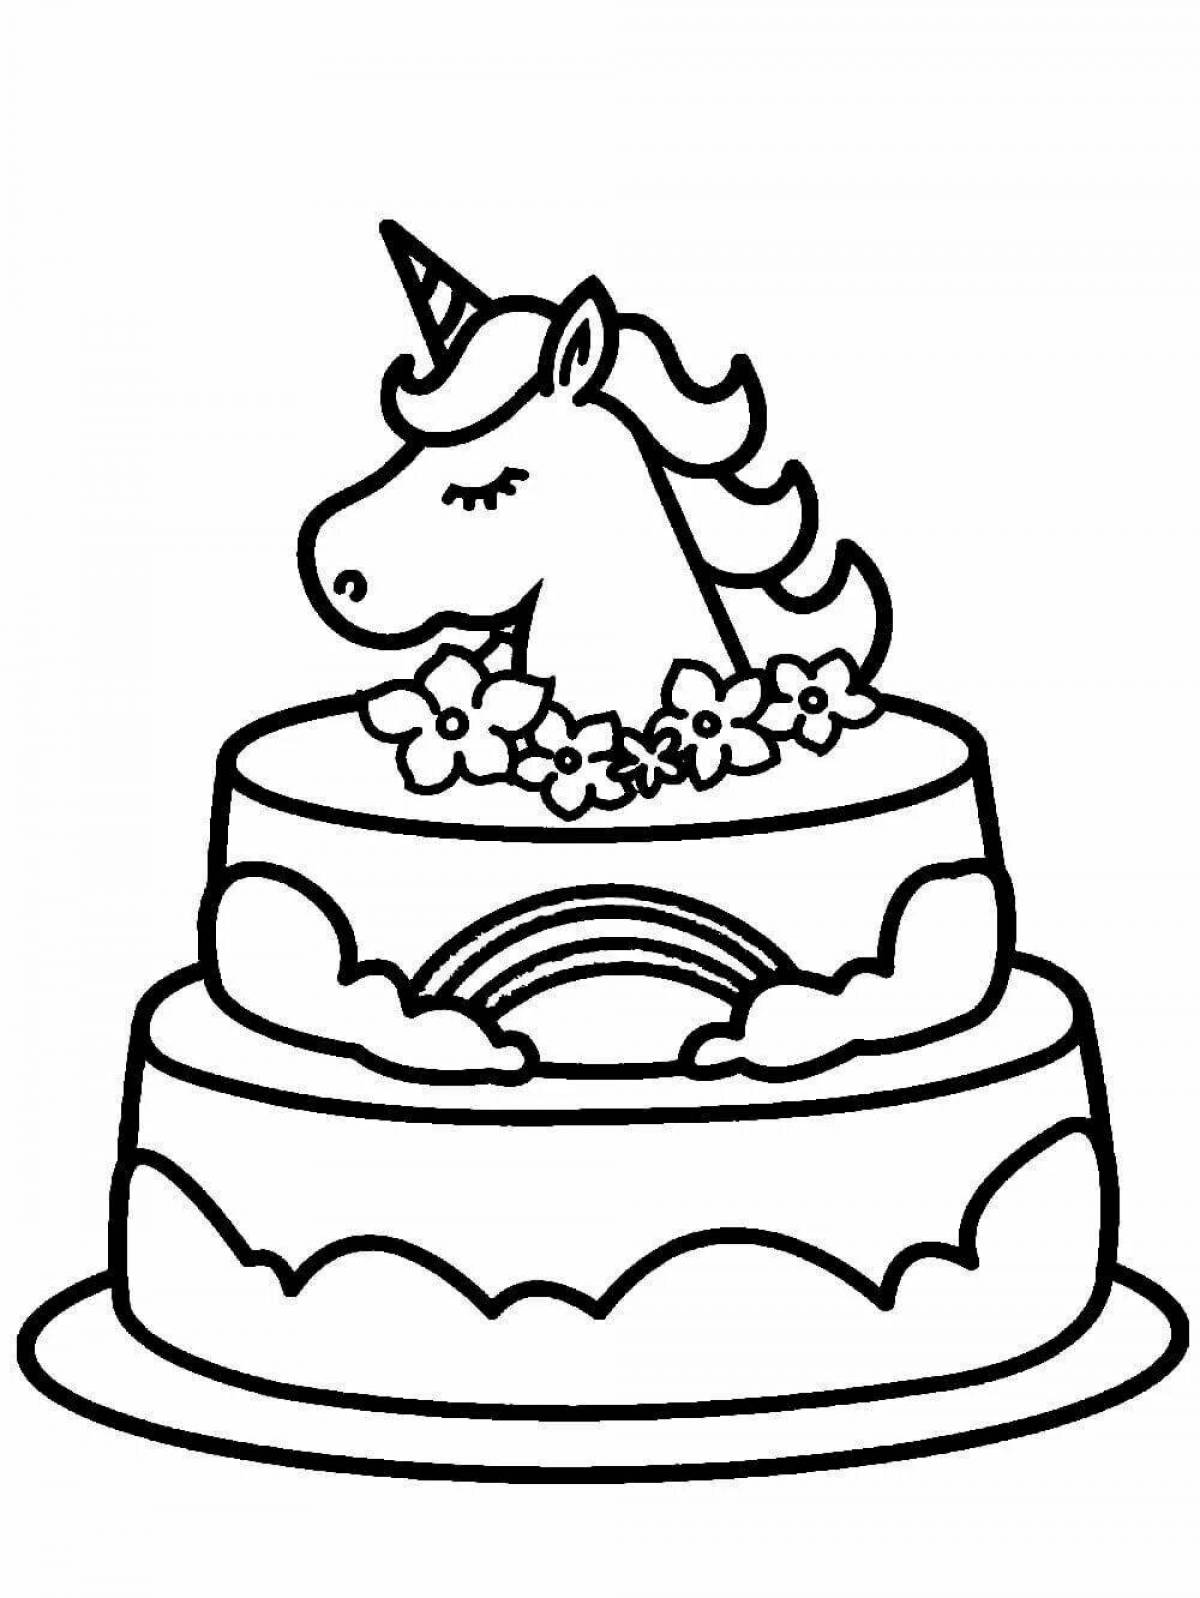 Dazzling unicorn cake coloring book